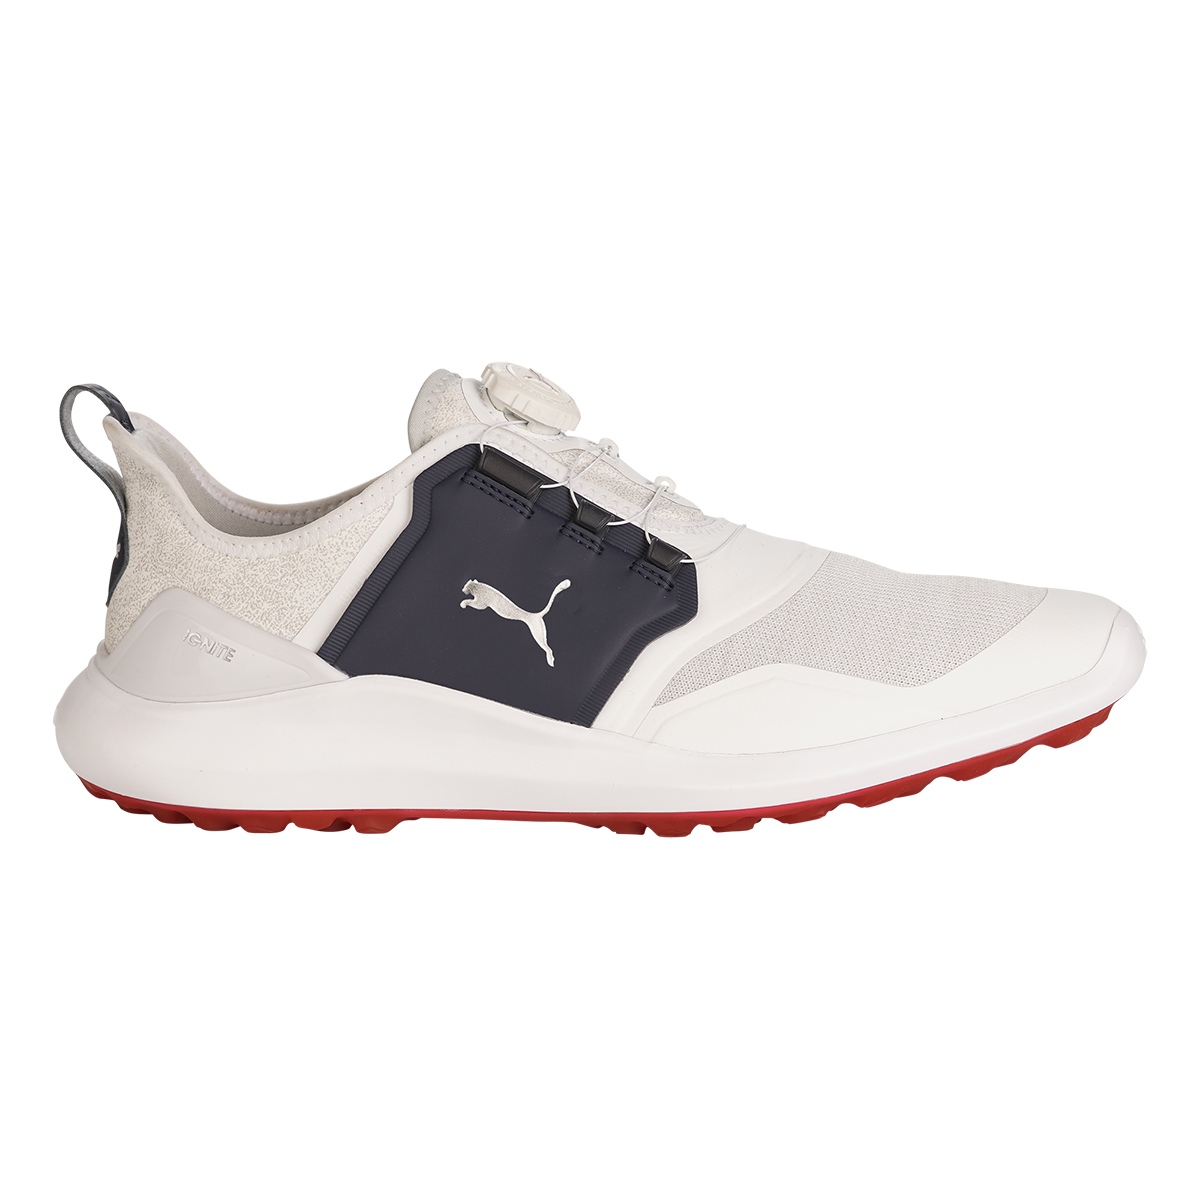 puma navy golf shoes